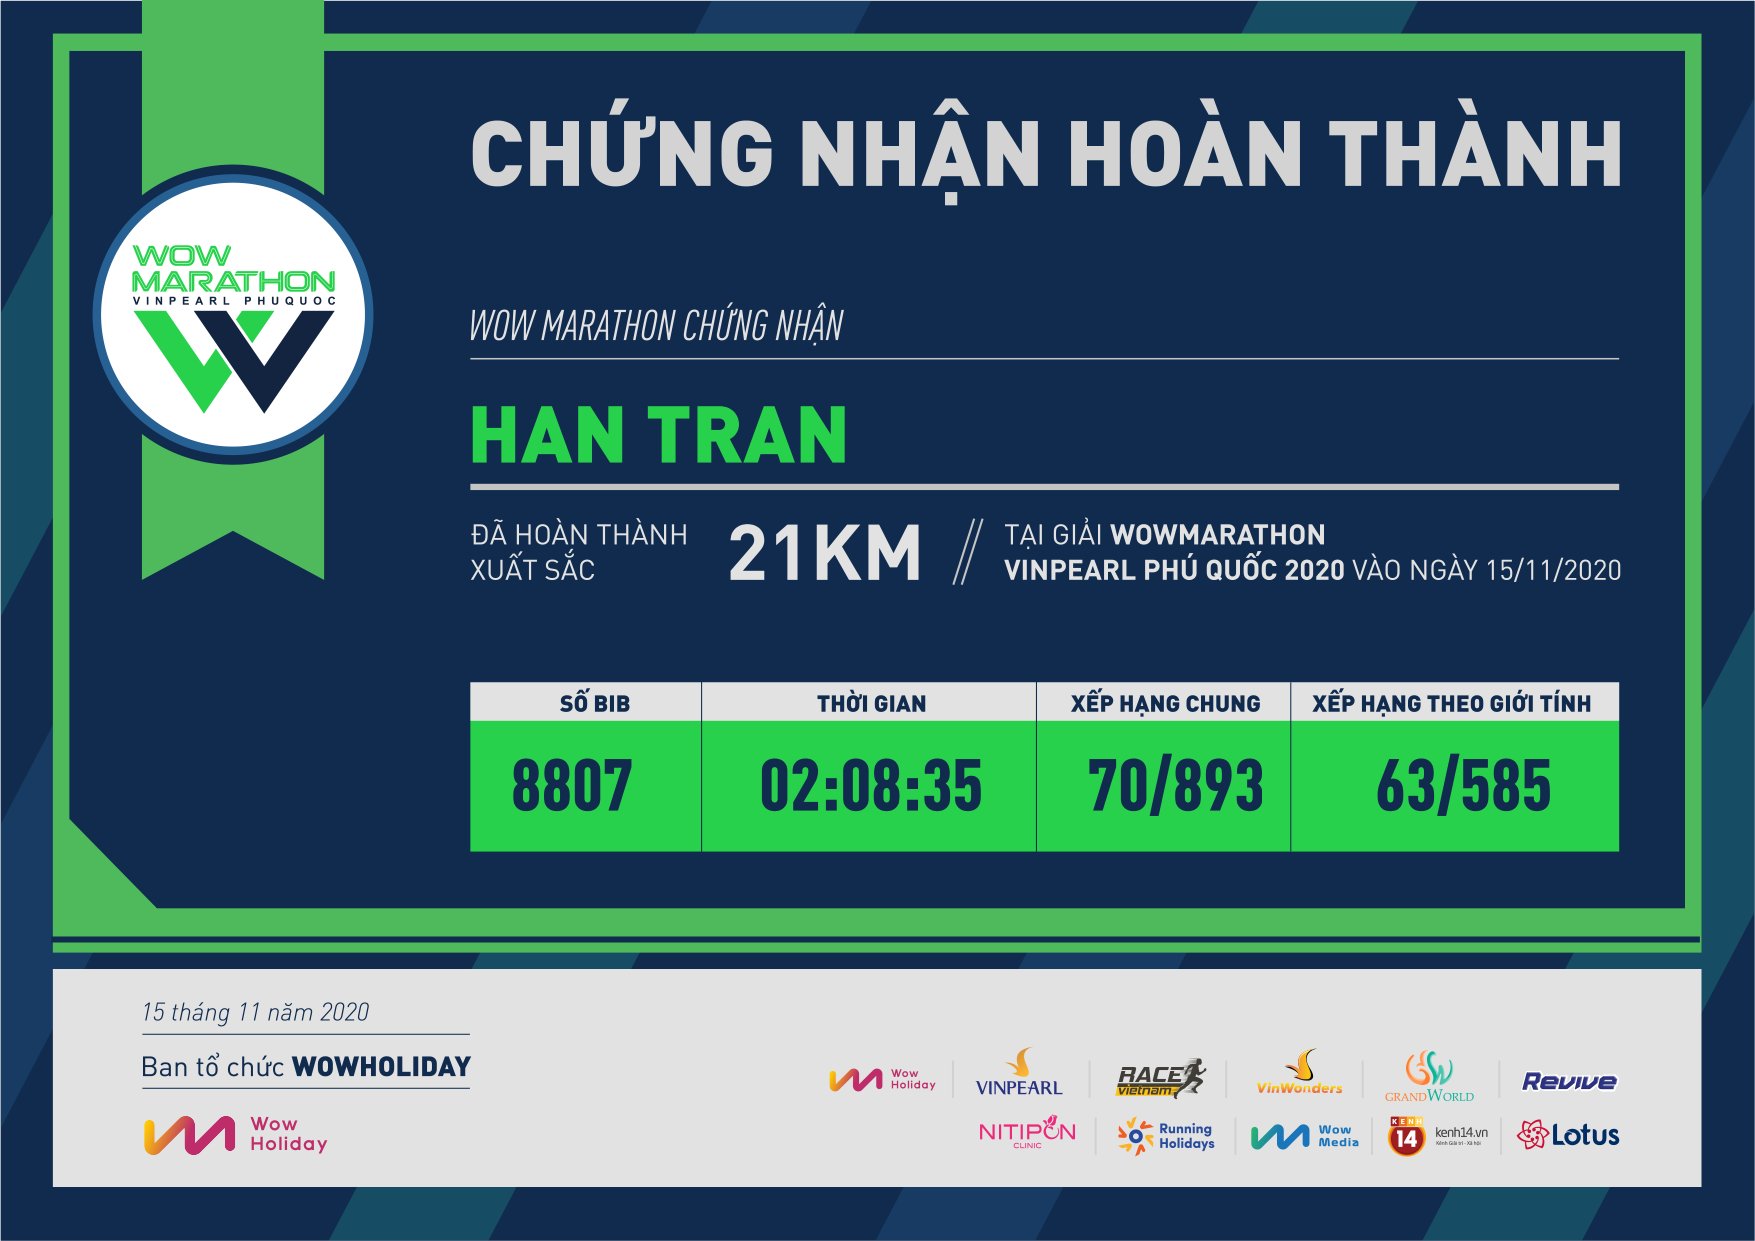 8807 - Han Tran